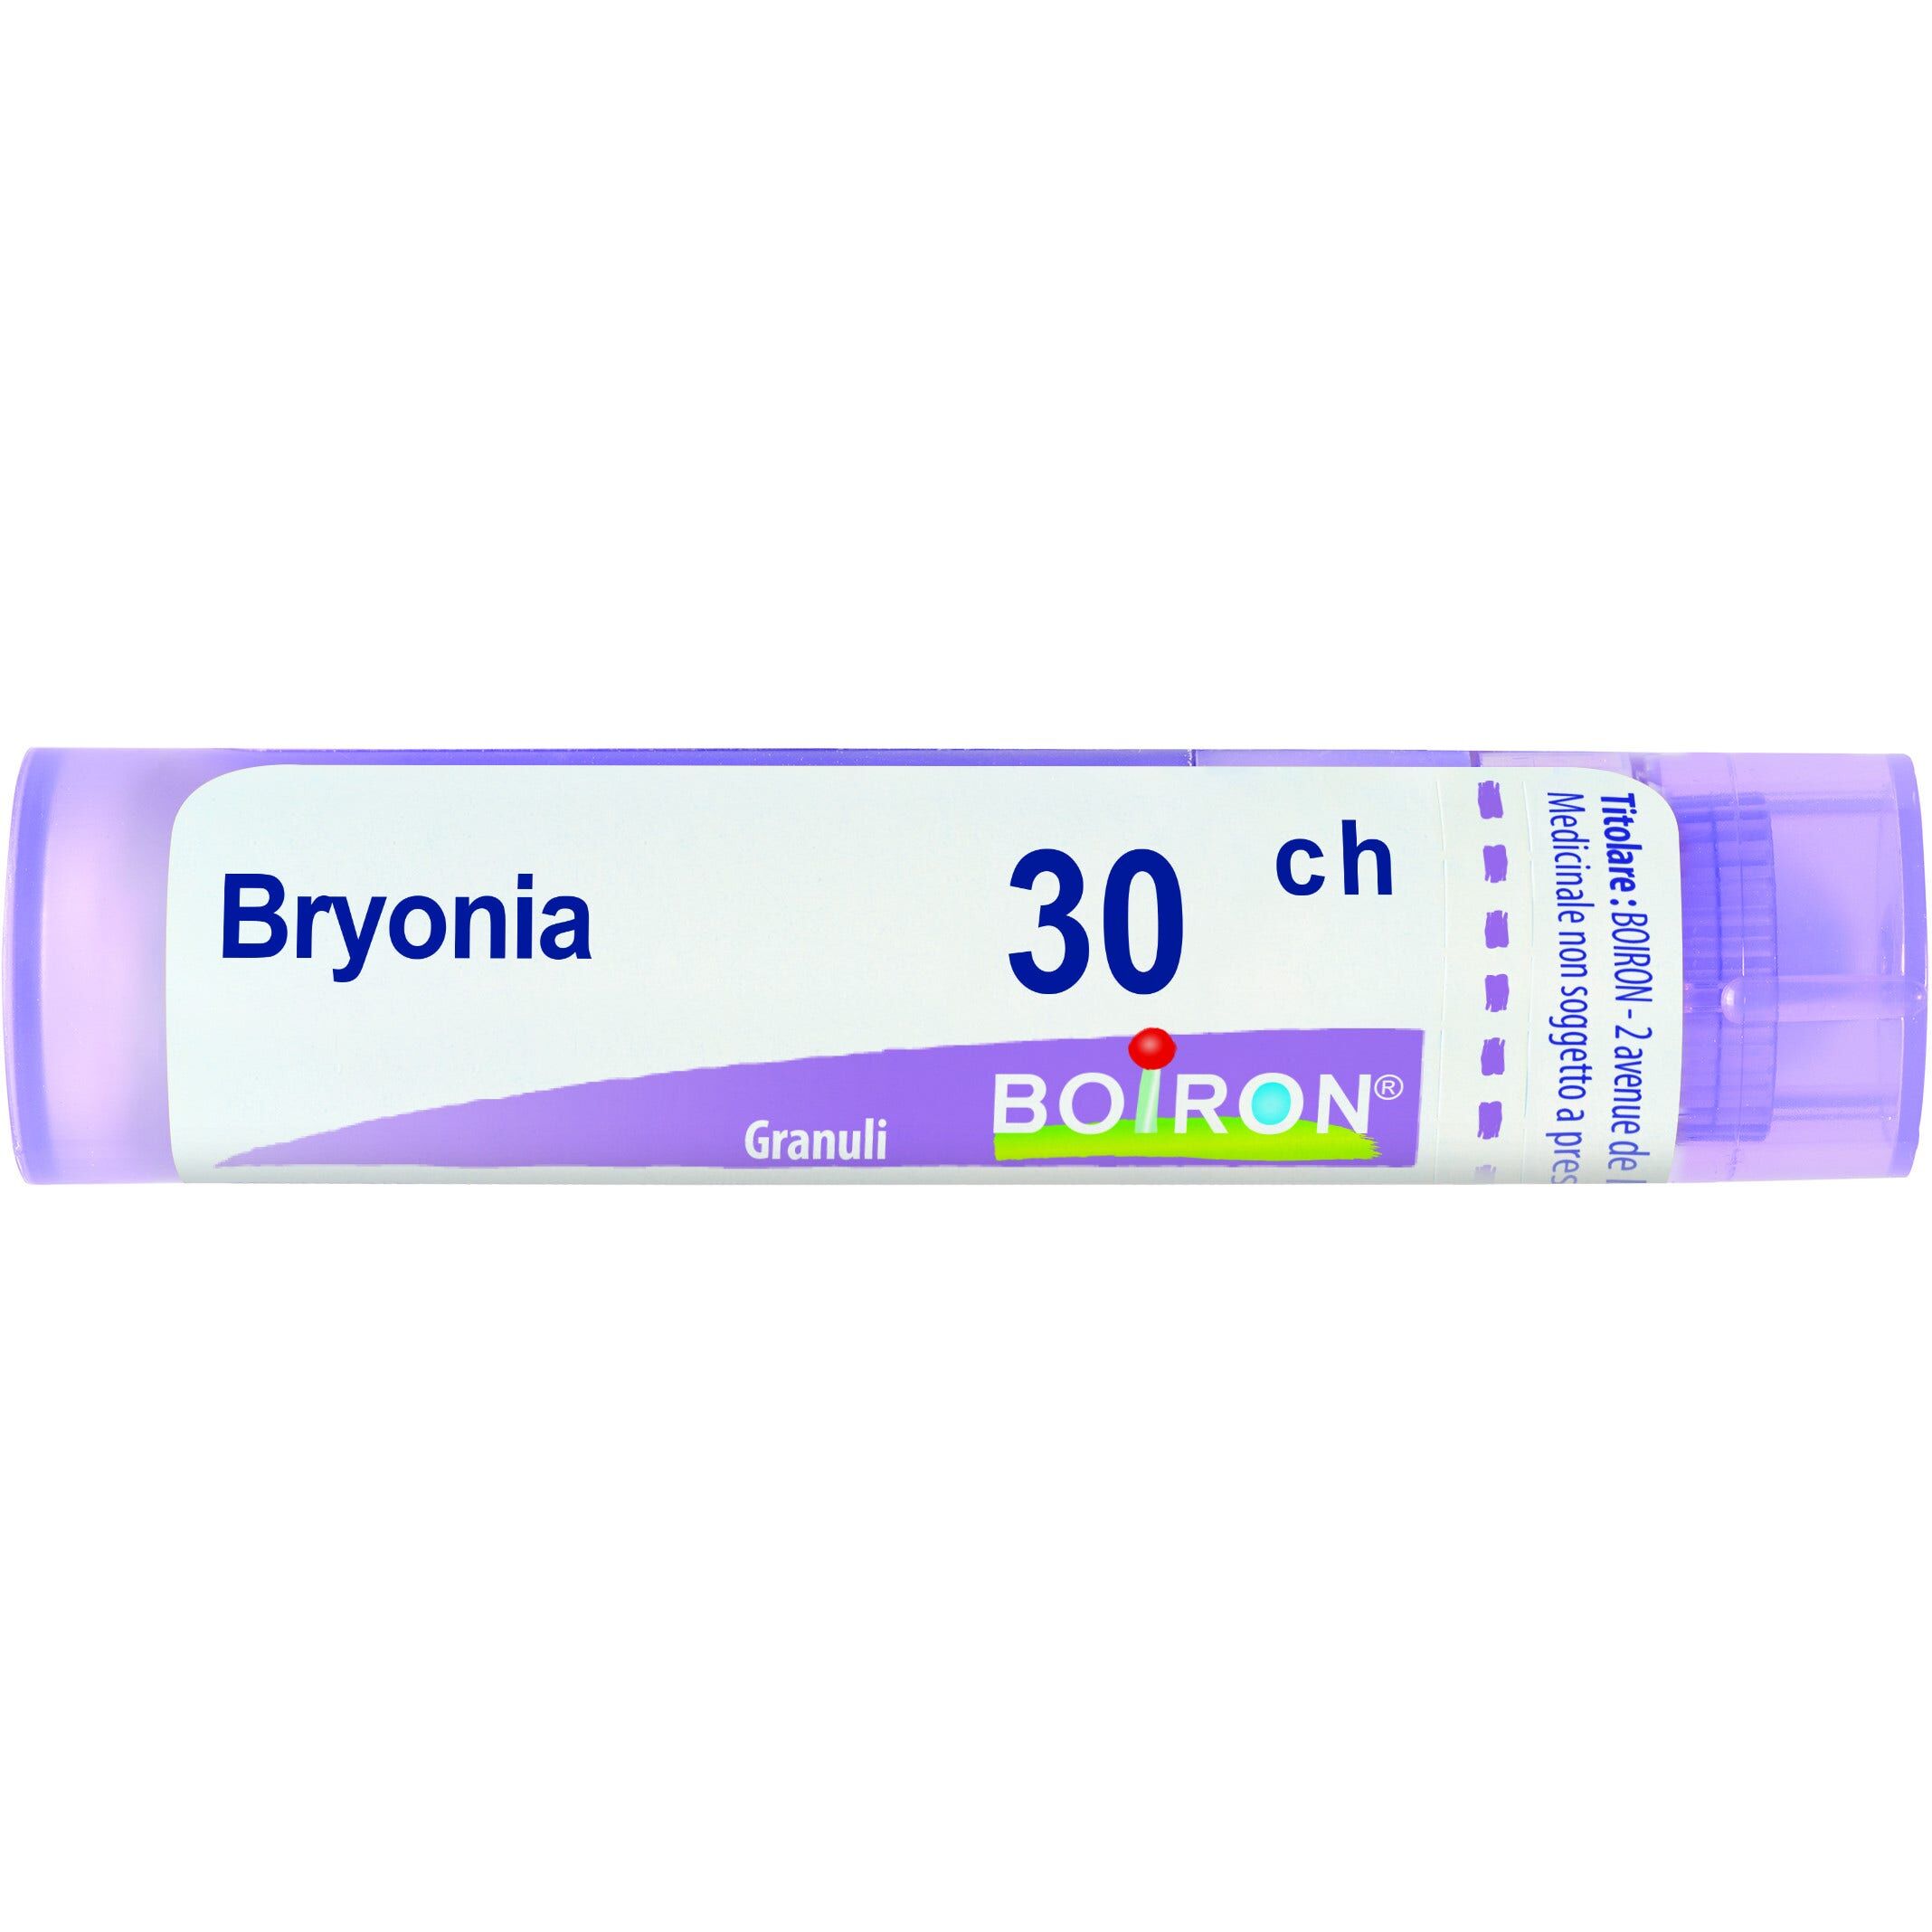 Boiron Bryonia Granuli 30 Ch Contenitore Multidose